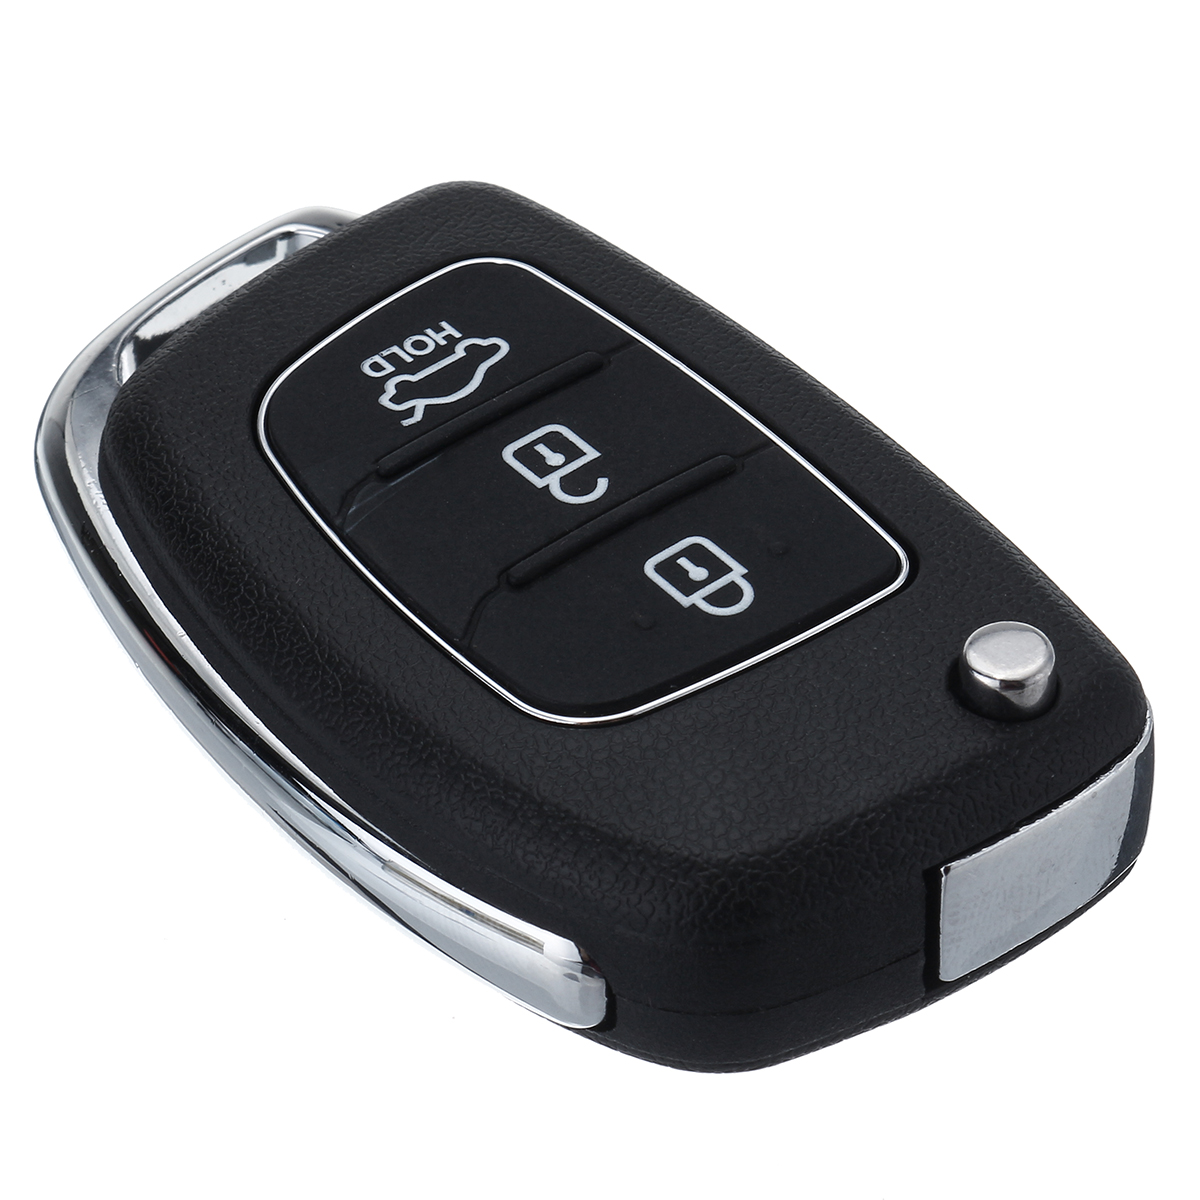 3 Buttons Remote Flip Key Fob Case Shell with Blade Battery for Hyundai Santa Fe IX35 I20 2013-2014